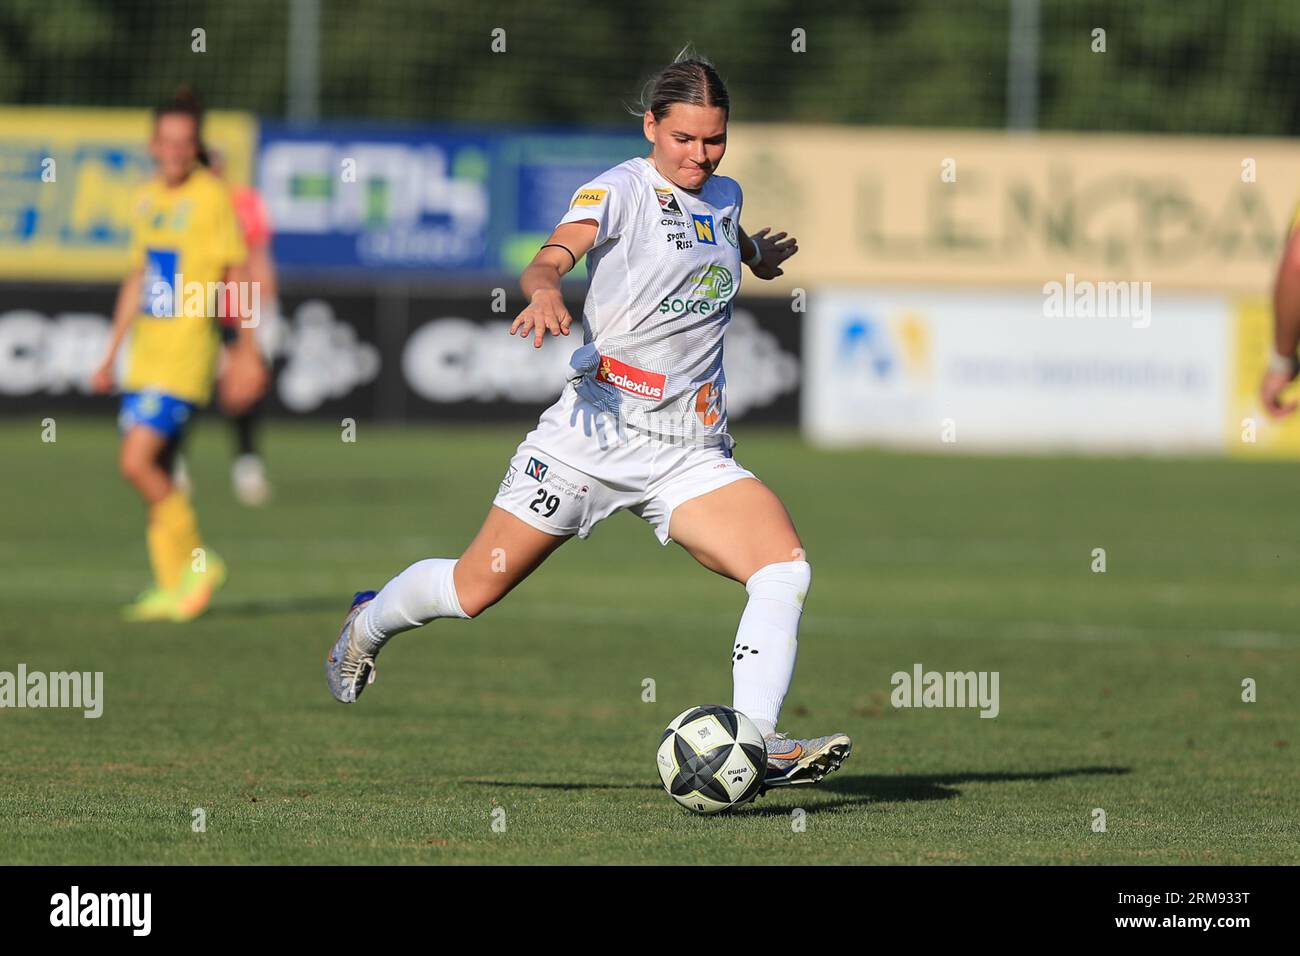 Tatjana Weiss (29 Neulengbach) during the Admiral Frauen Bundesliga match Neulengbach vs Vienna at Wienerwald Stadion (Tom Seiss/ SPP) Credit: SPP Sport Press Photo. /Alamy Live News Stock Photo